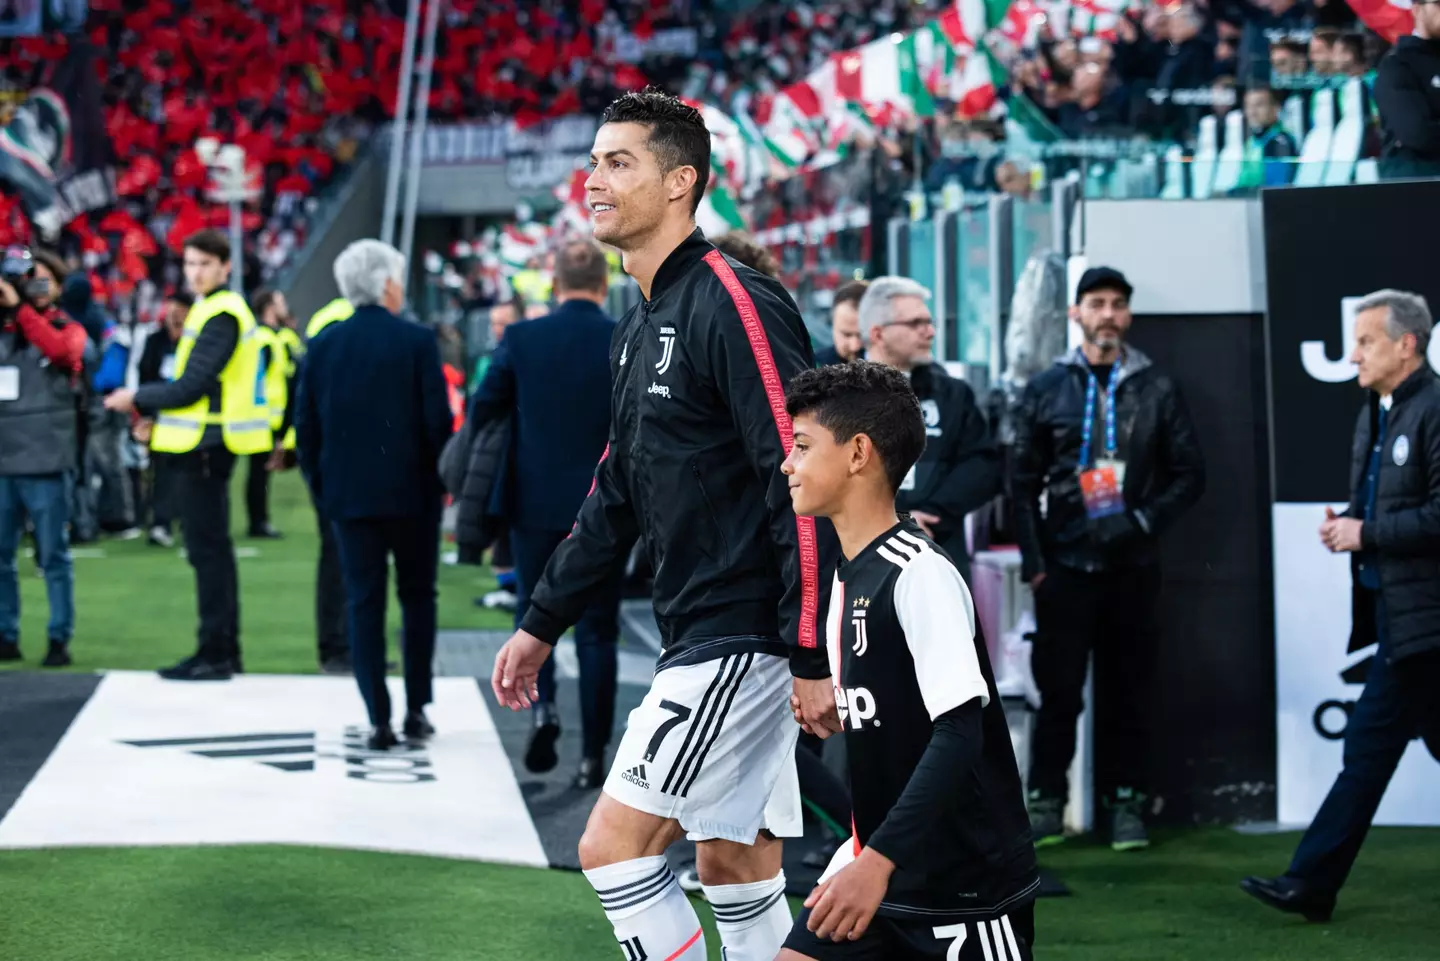 Ronaldo Jr with his father at Juventus. (Image